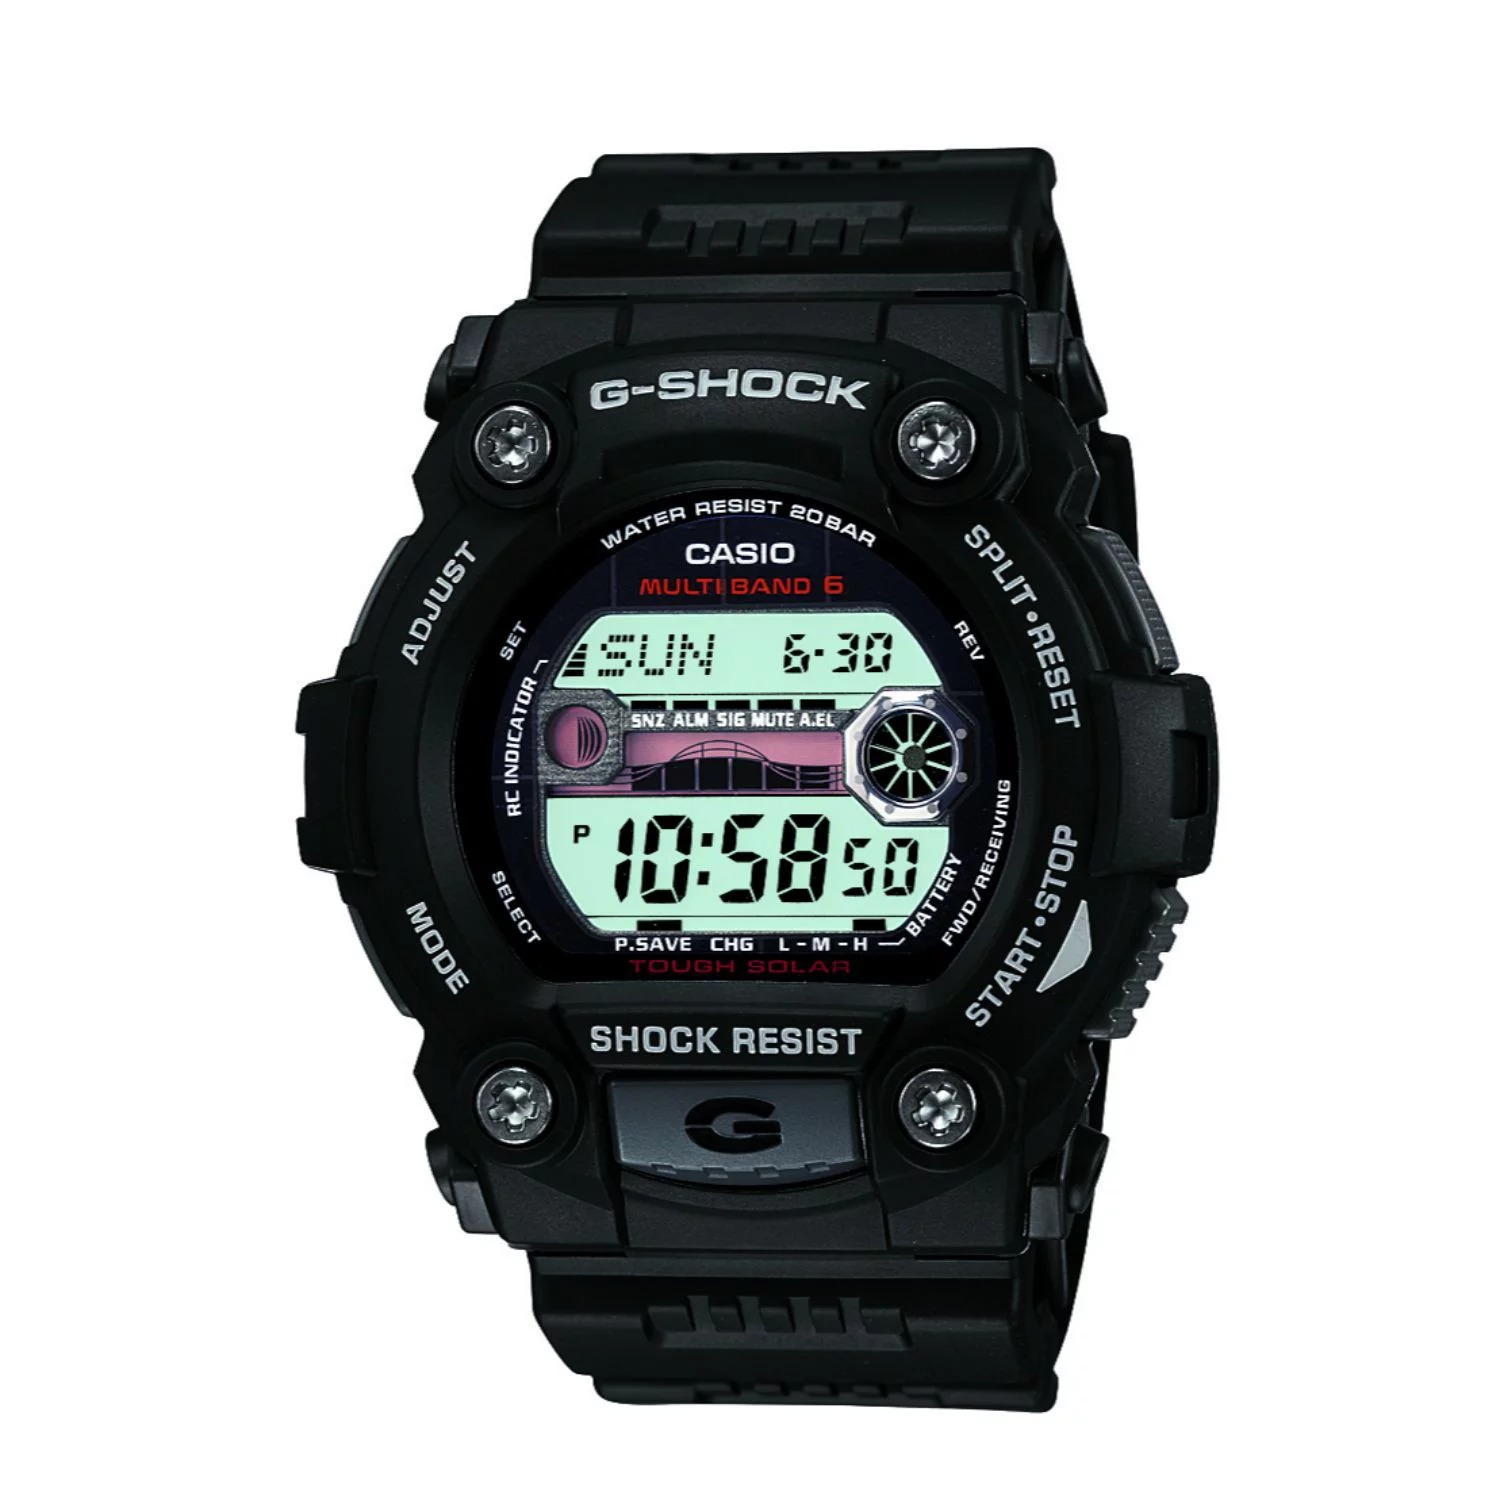 Casio Men's G-Shock Tough Solar Atomic Watch $56.14 + Tax + Free Shipping